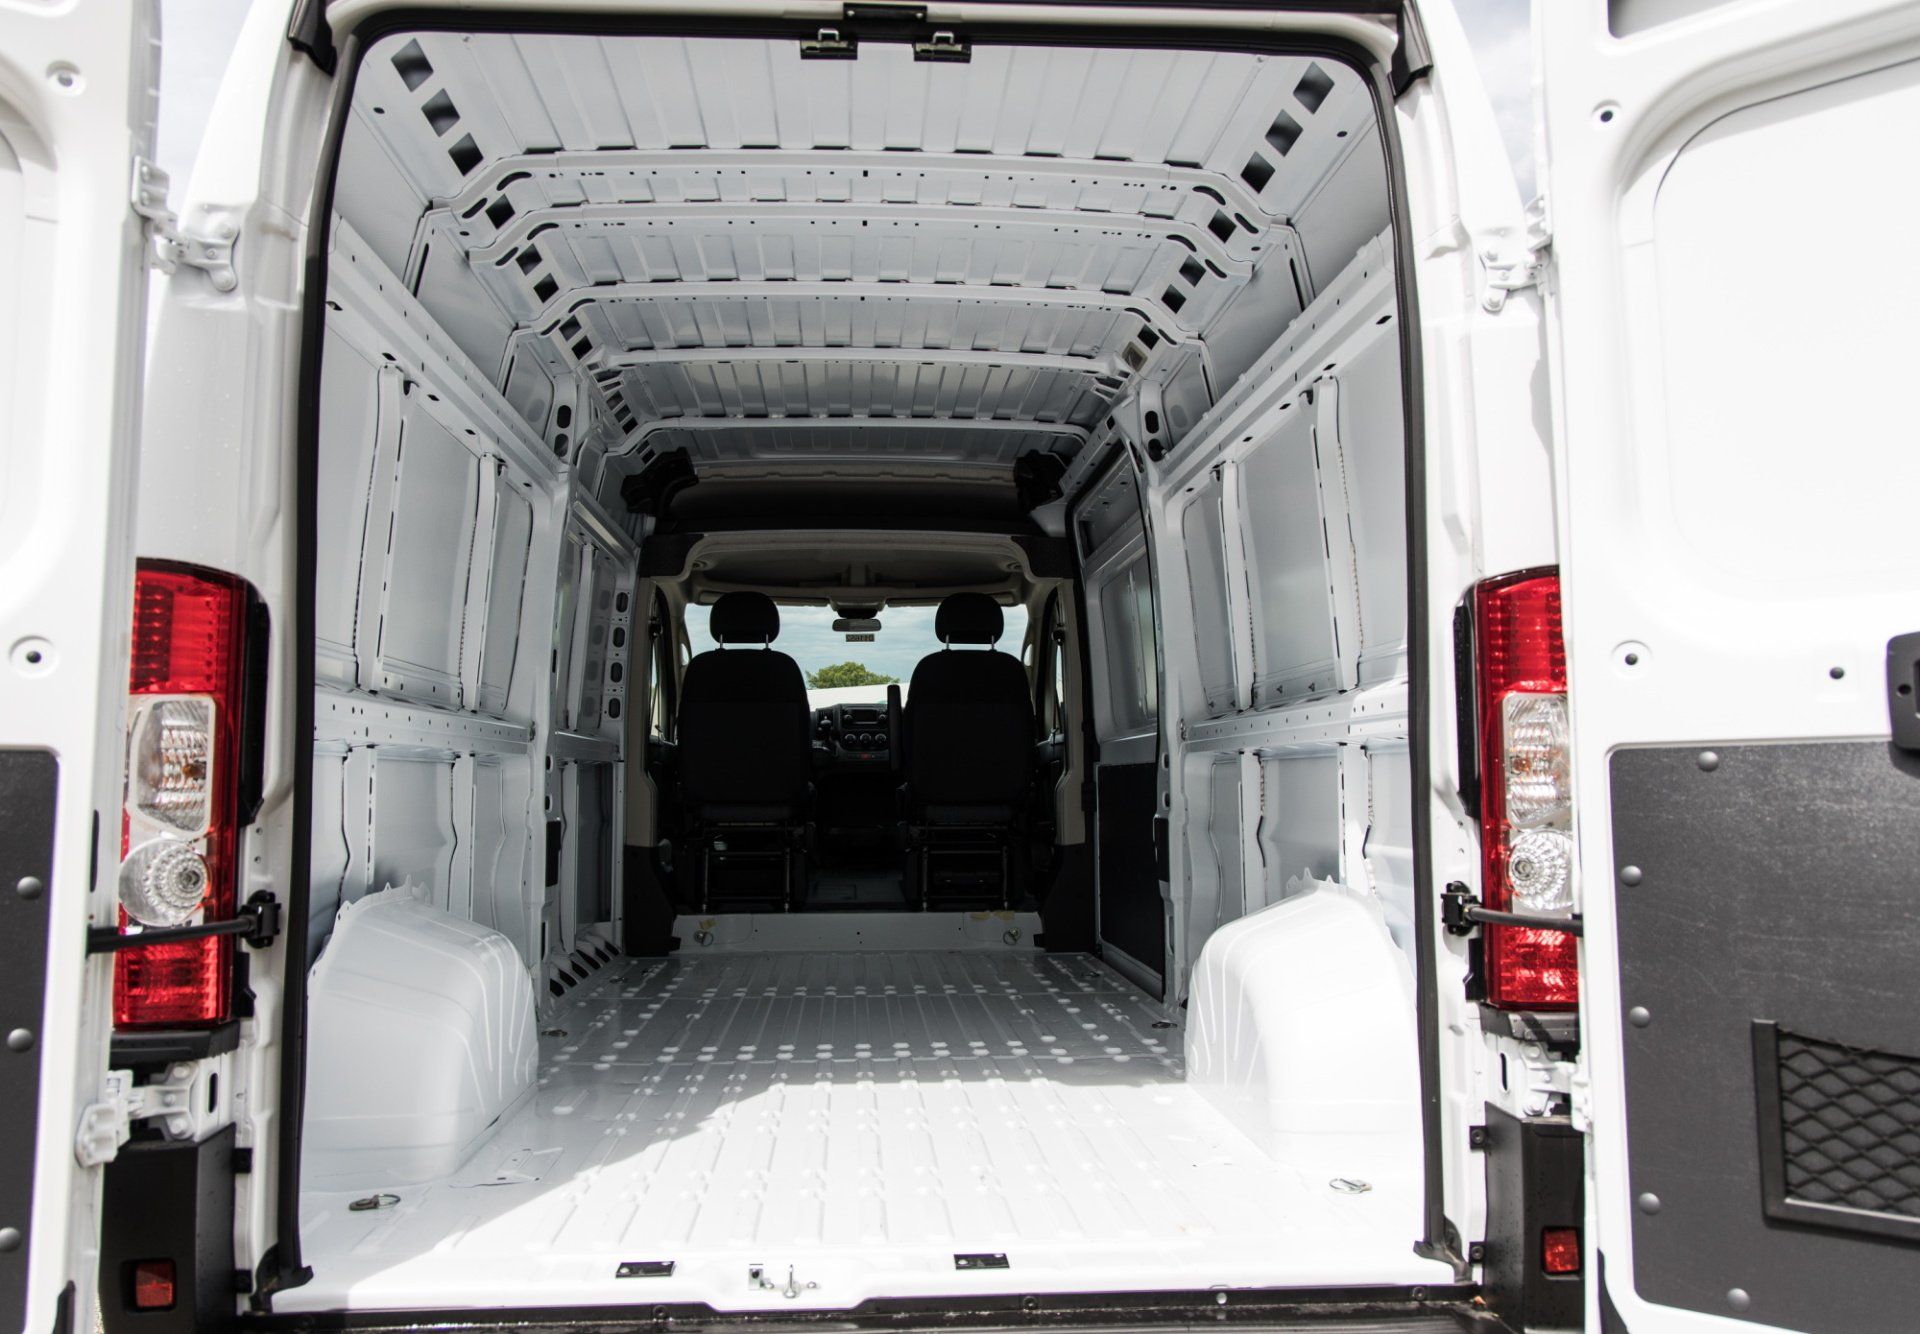 The inside of a white van with the door open